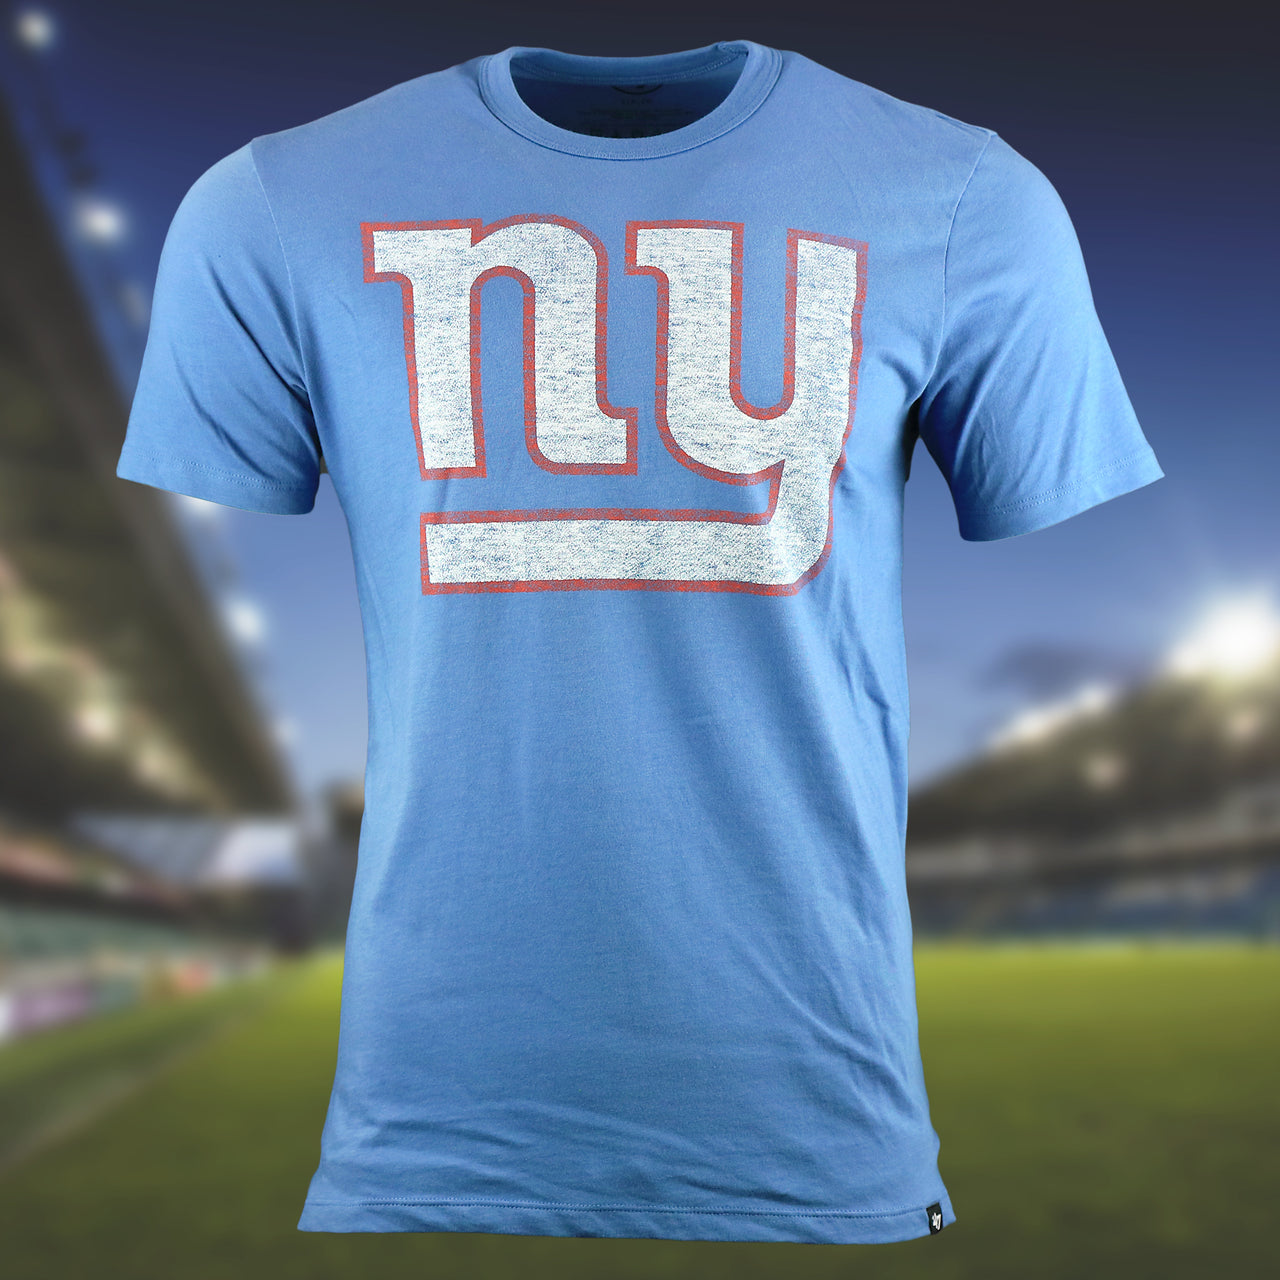 The New York Giants Premier Franklin Worn Printed Giants Logo Tshirt | Cadet Blue Tshirt